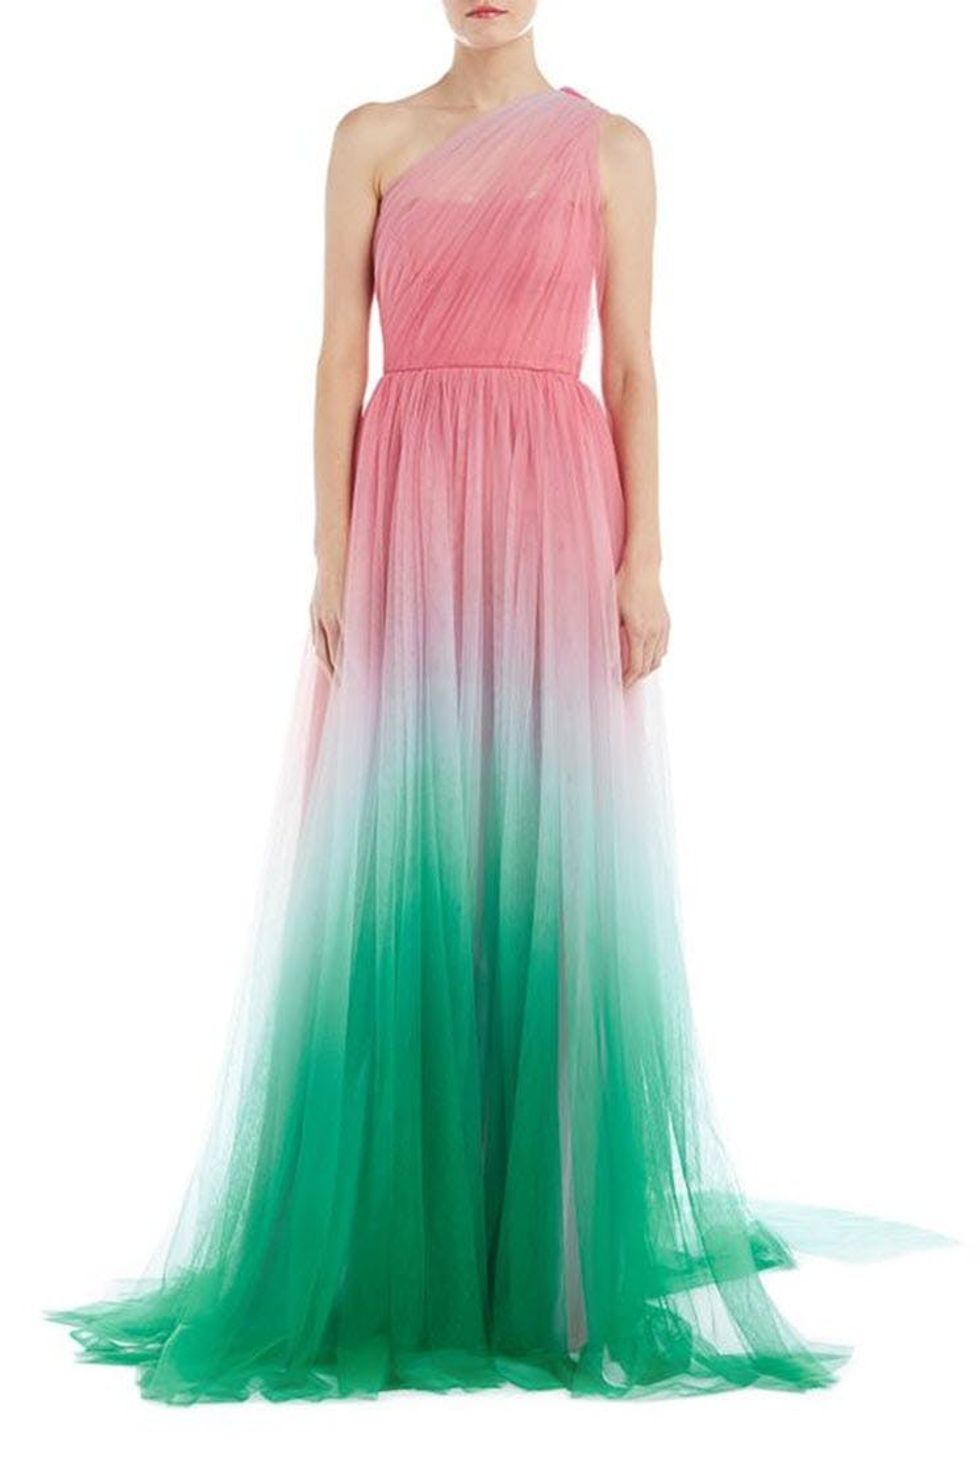 50 Colorful Wedding Dresses Non-Traditional Brides Will Love - Brit + Co